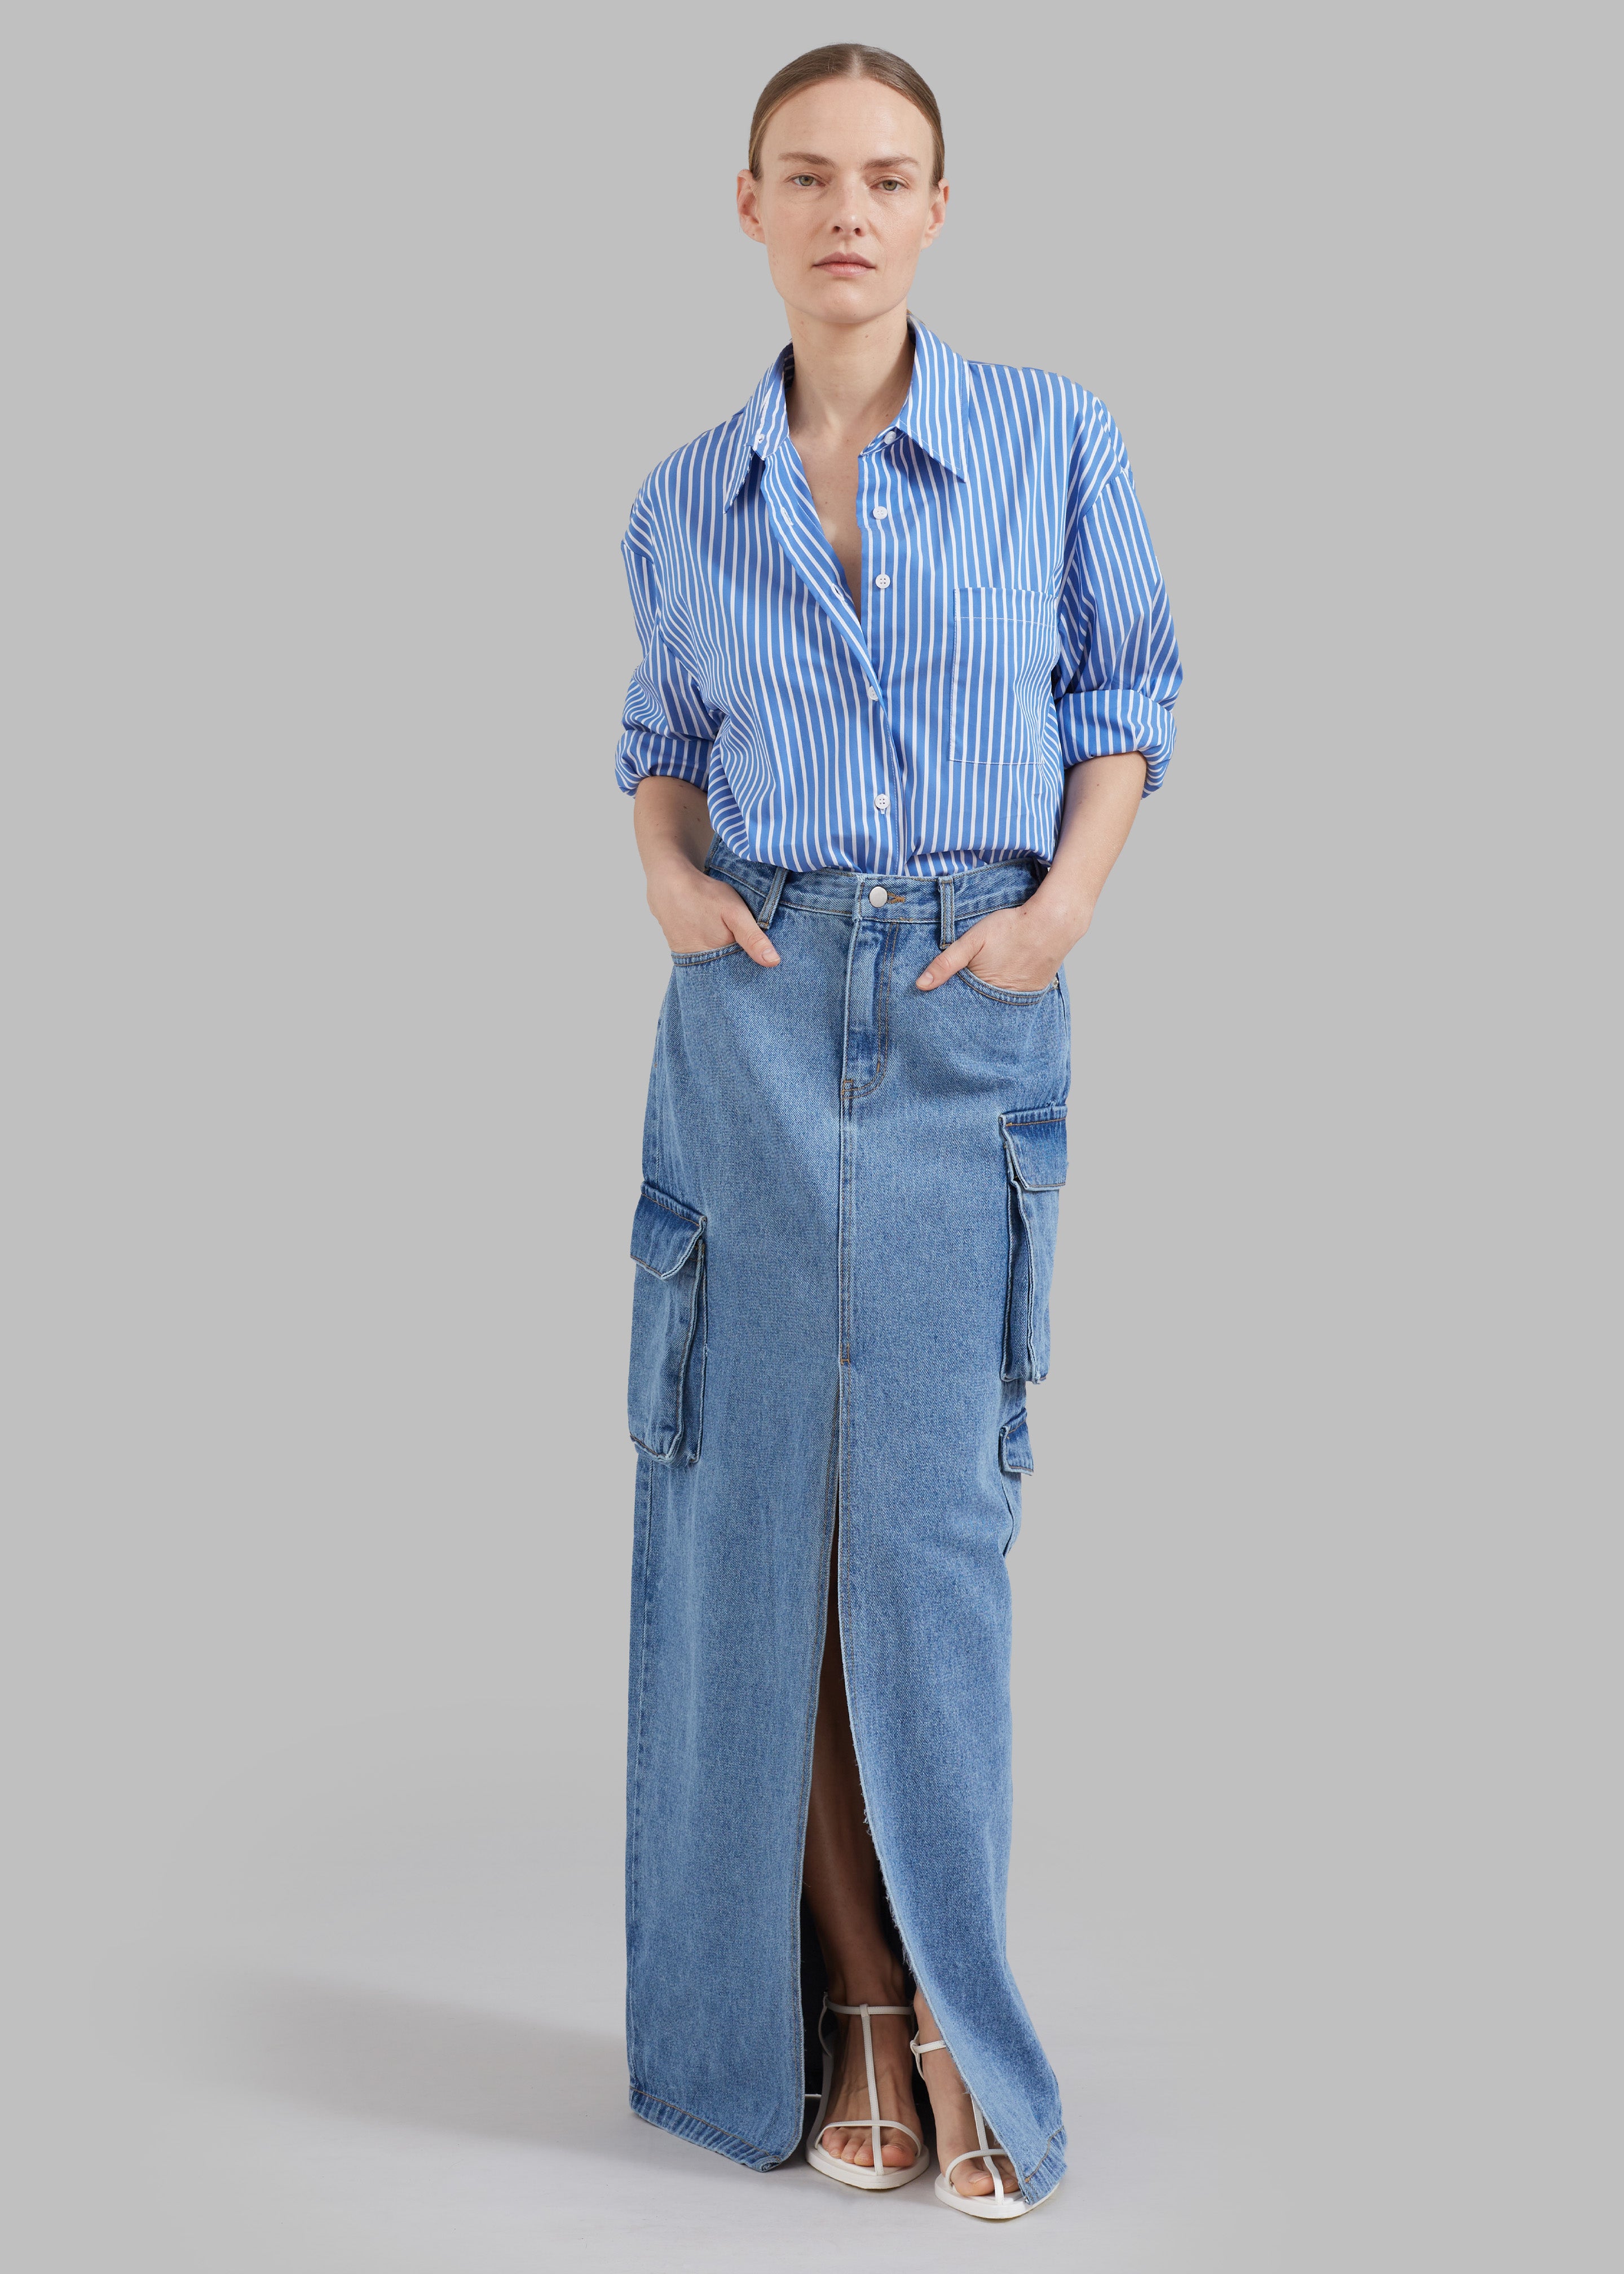 Lui Thin Stripe Shirt - Medium Blue Stripe - 3